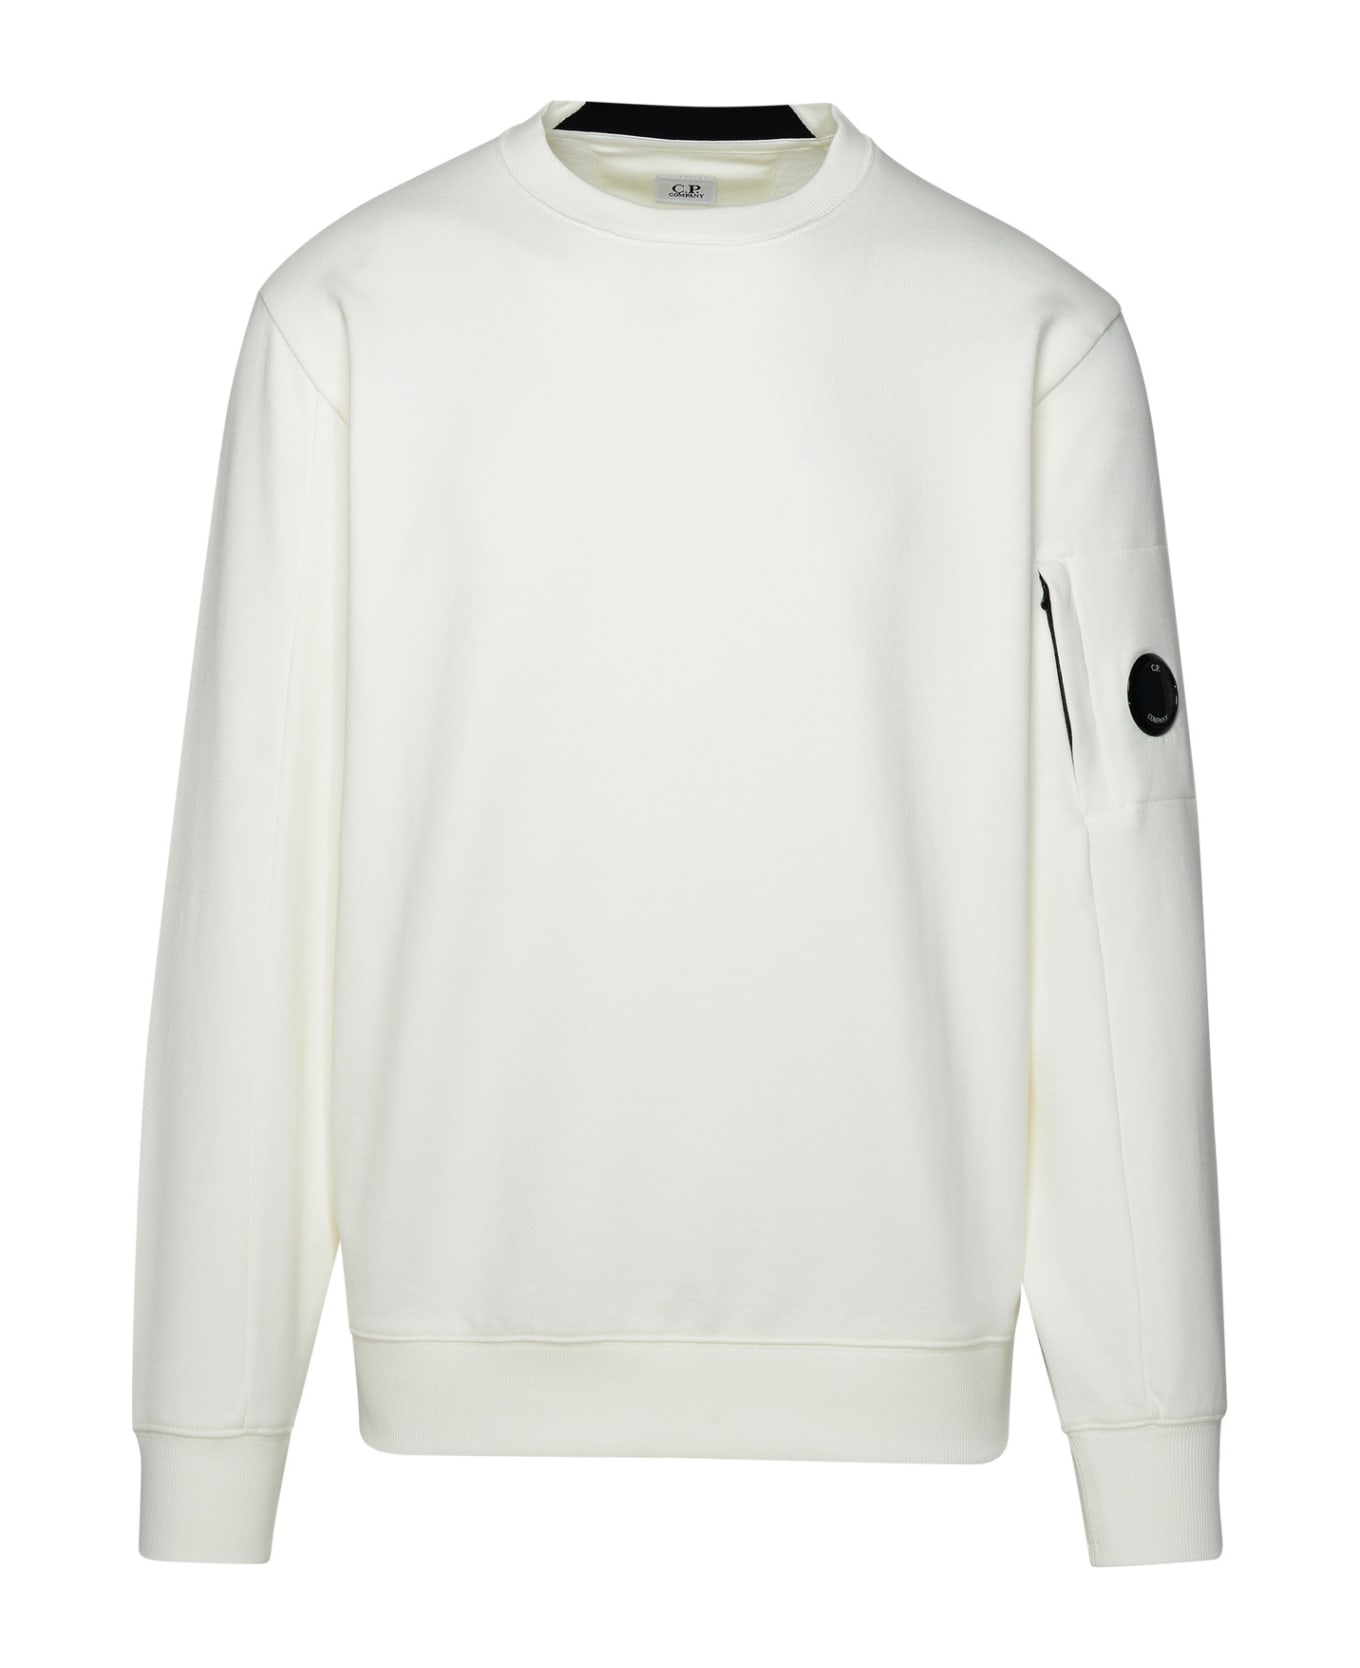 C.P. Company 'diagonal Raised Fleece' Ivory Cotton Sweatshirt - Avorio ニットウェア